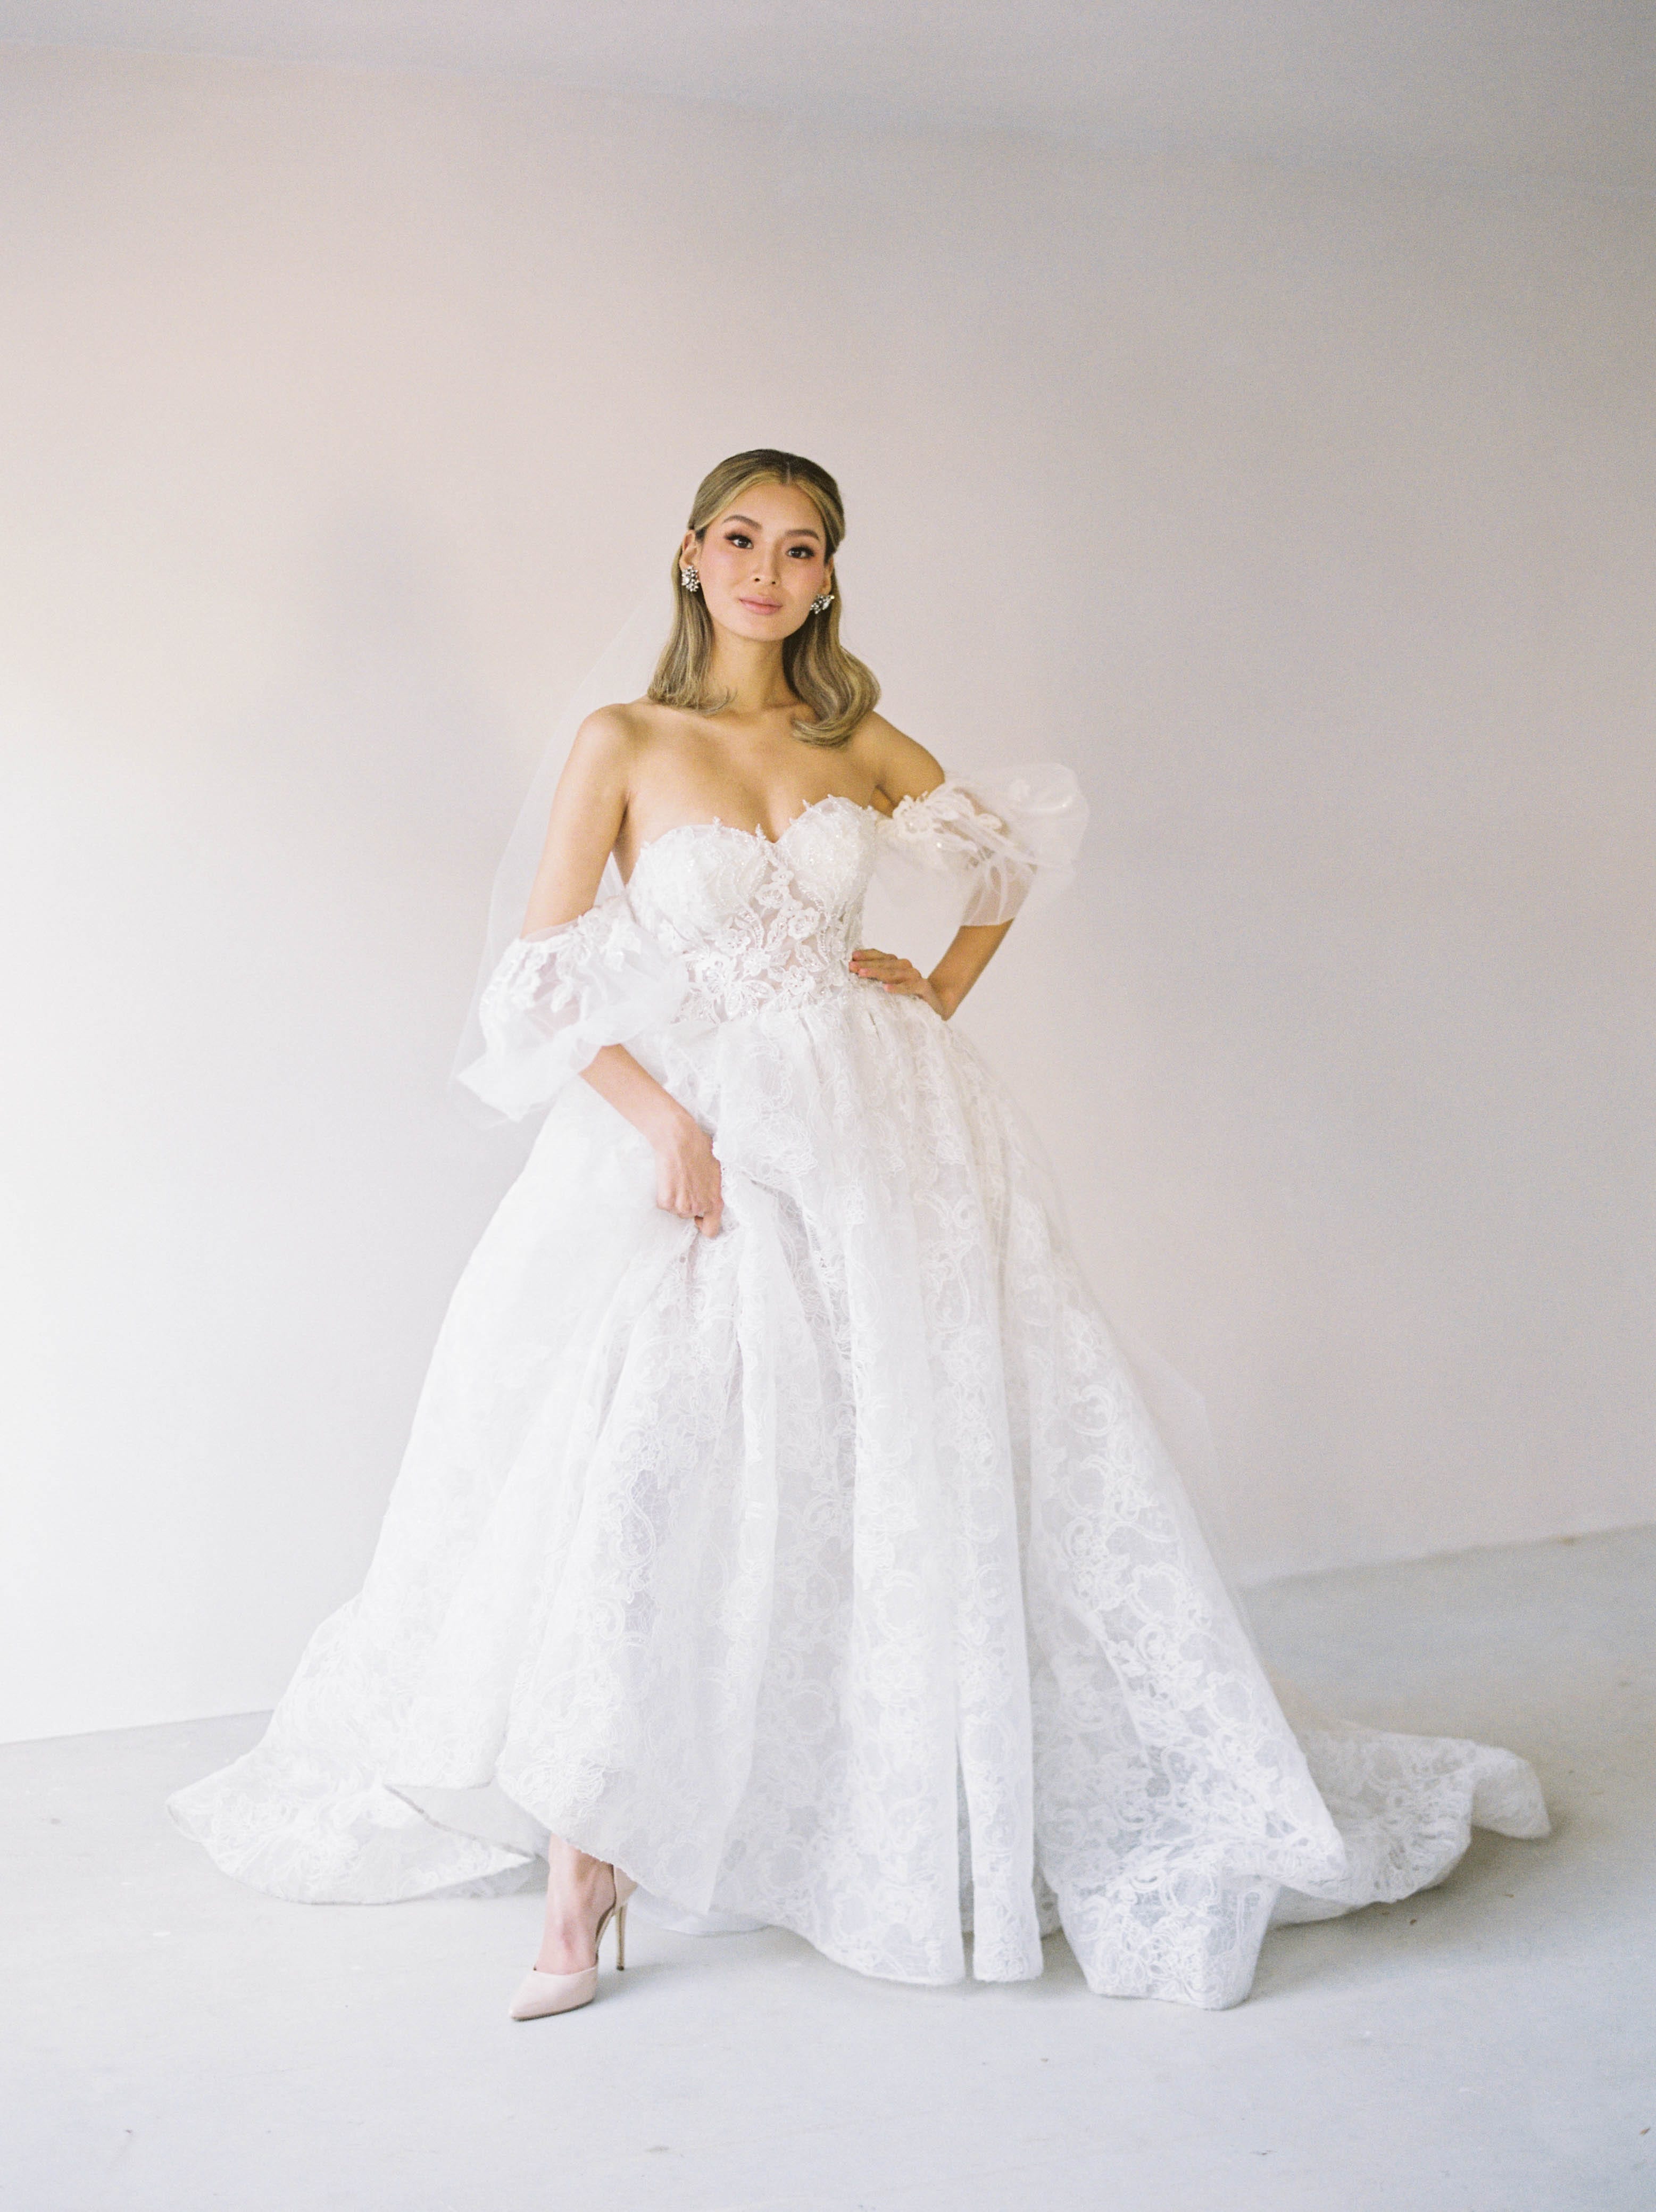 Jinza Bridal Wedding Dress Lace - Strapless Sweetheart Ball Gown Wedding Dress Detachable Sleeves, White